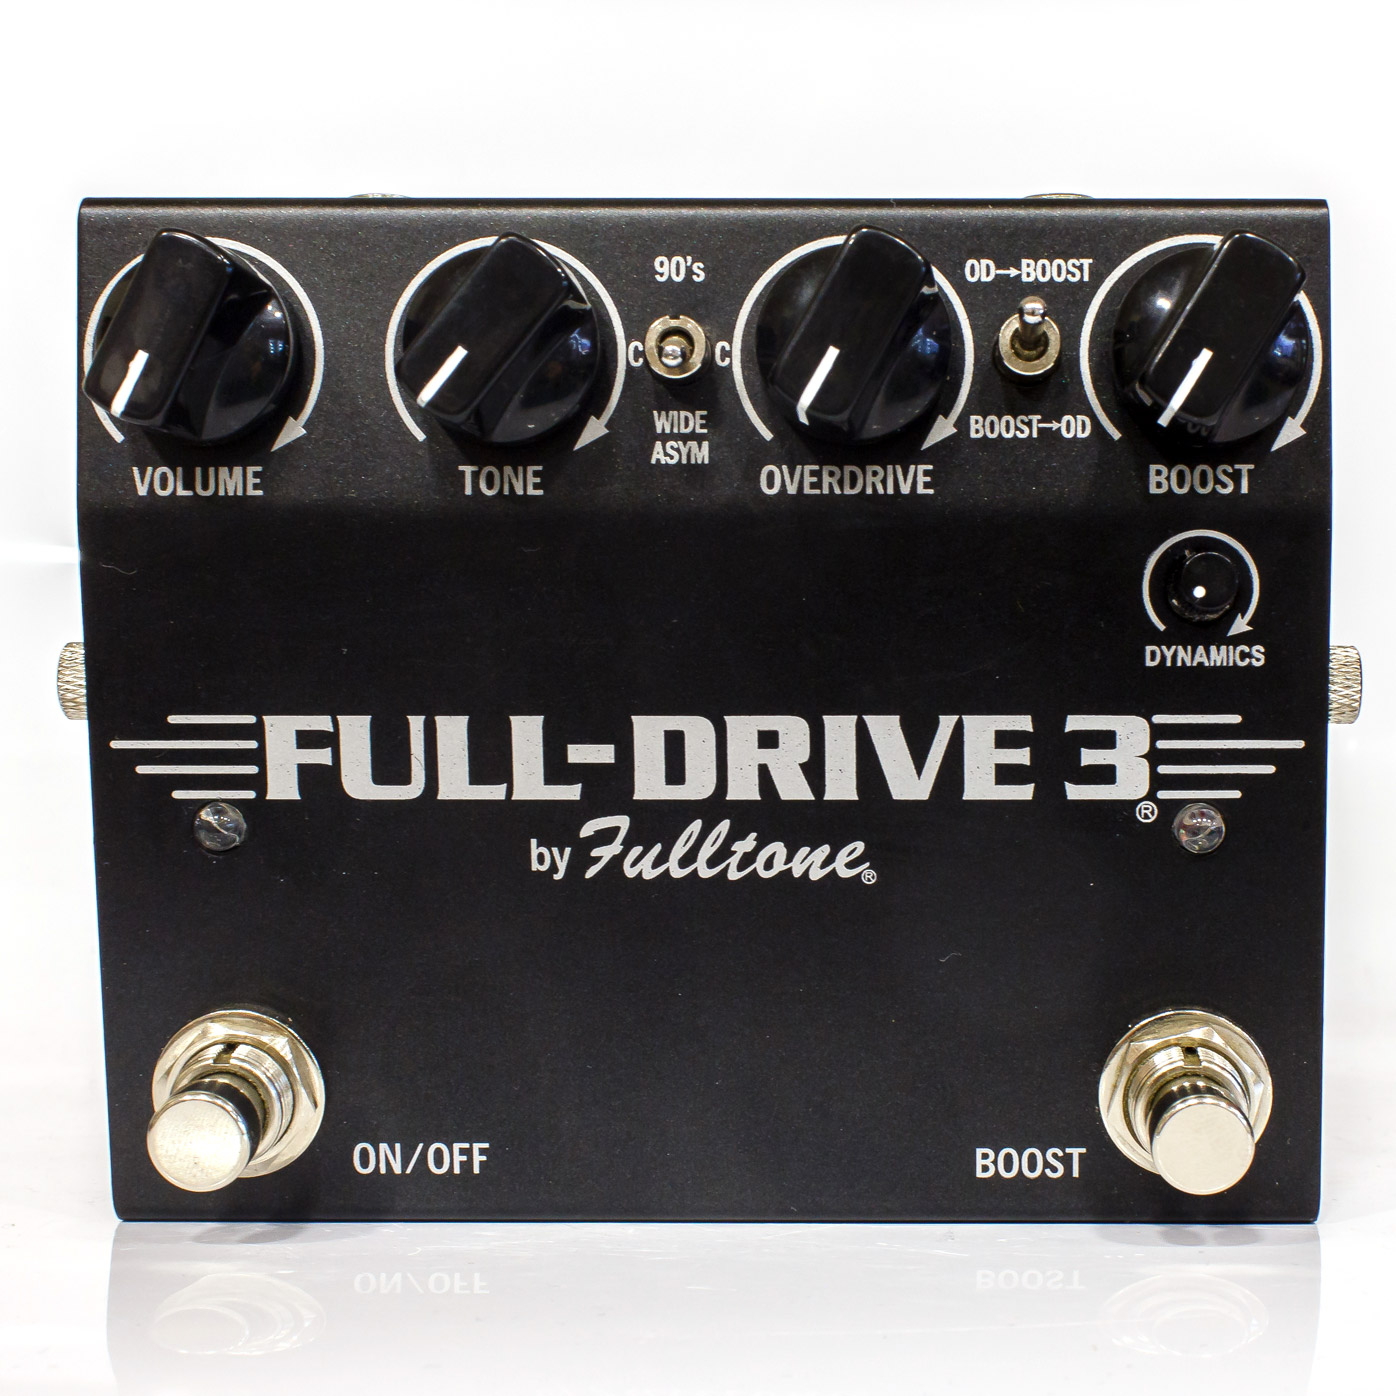 Fulltone Fulldrive 2 Overdrive. Fulltone Full-Drive 2. Овердрайв (звуковой эффект). Овердрайв купить. Овердрайв что это такое